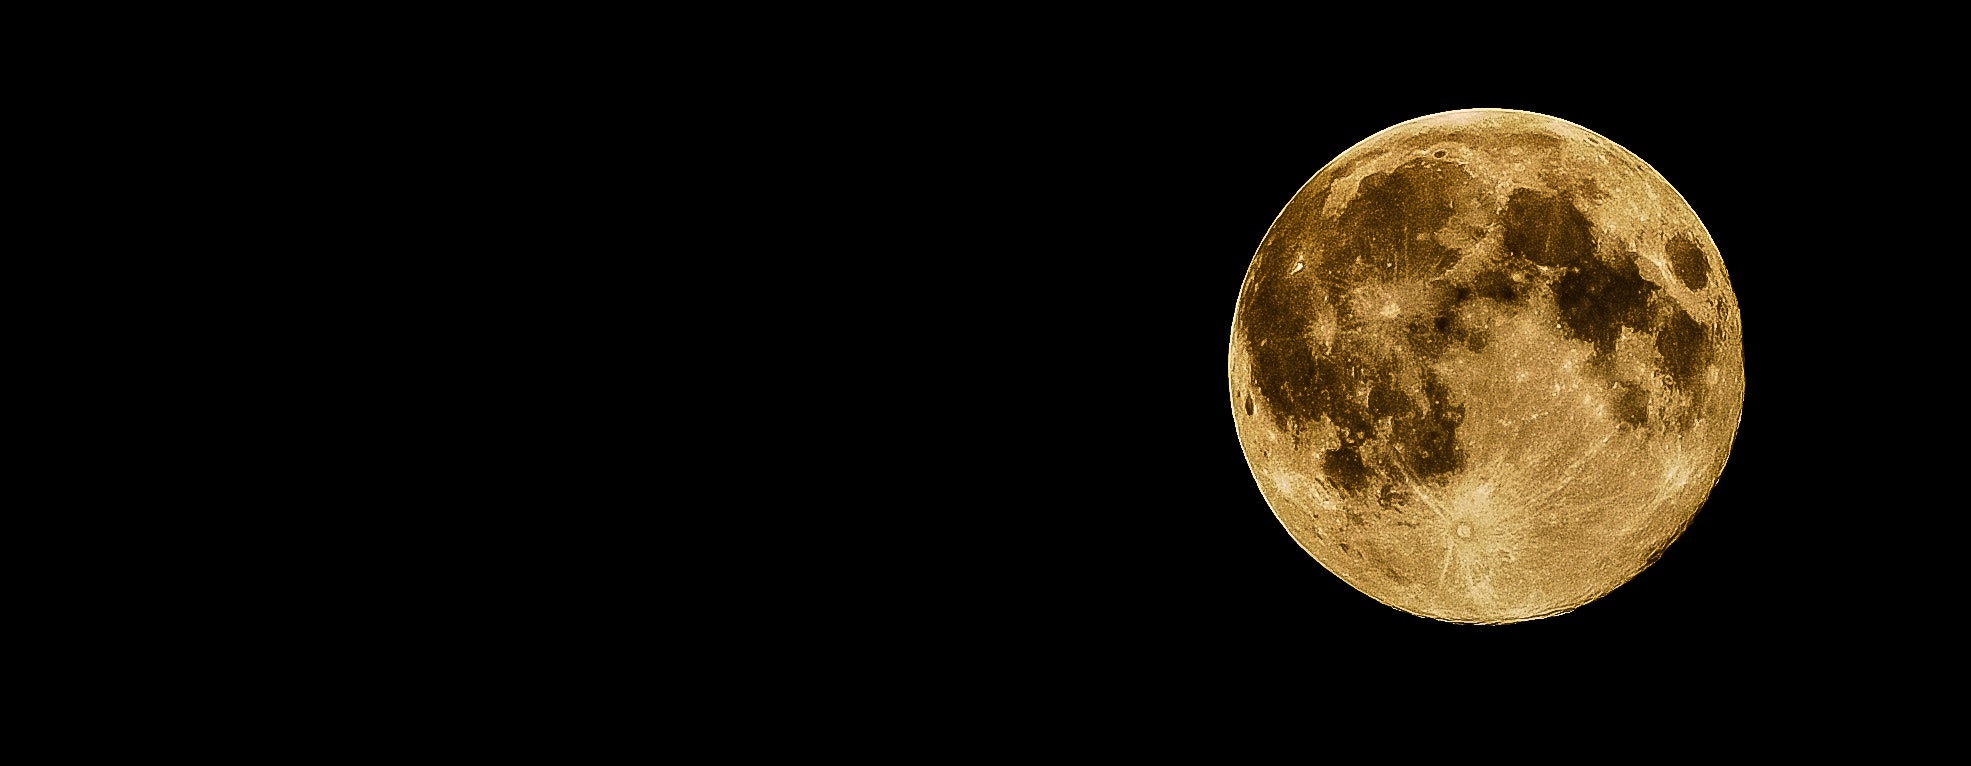 Best Moon Image · 100% Free Downloads